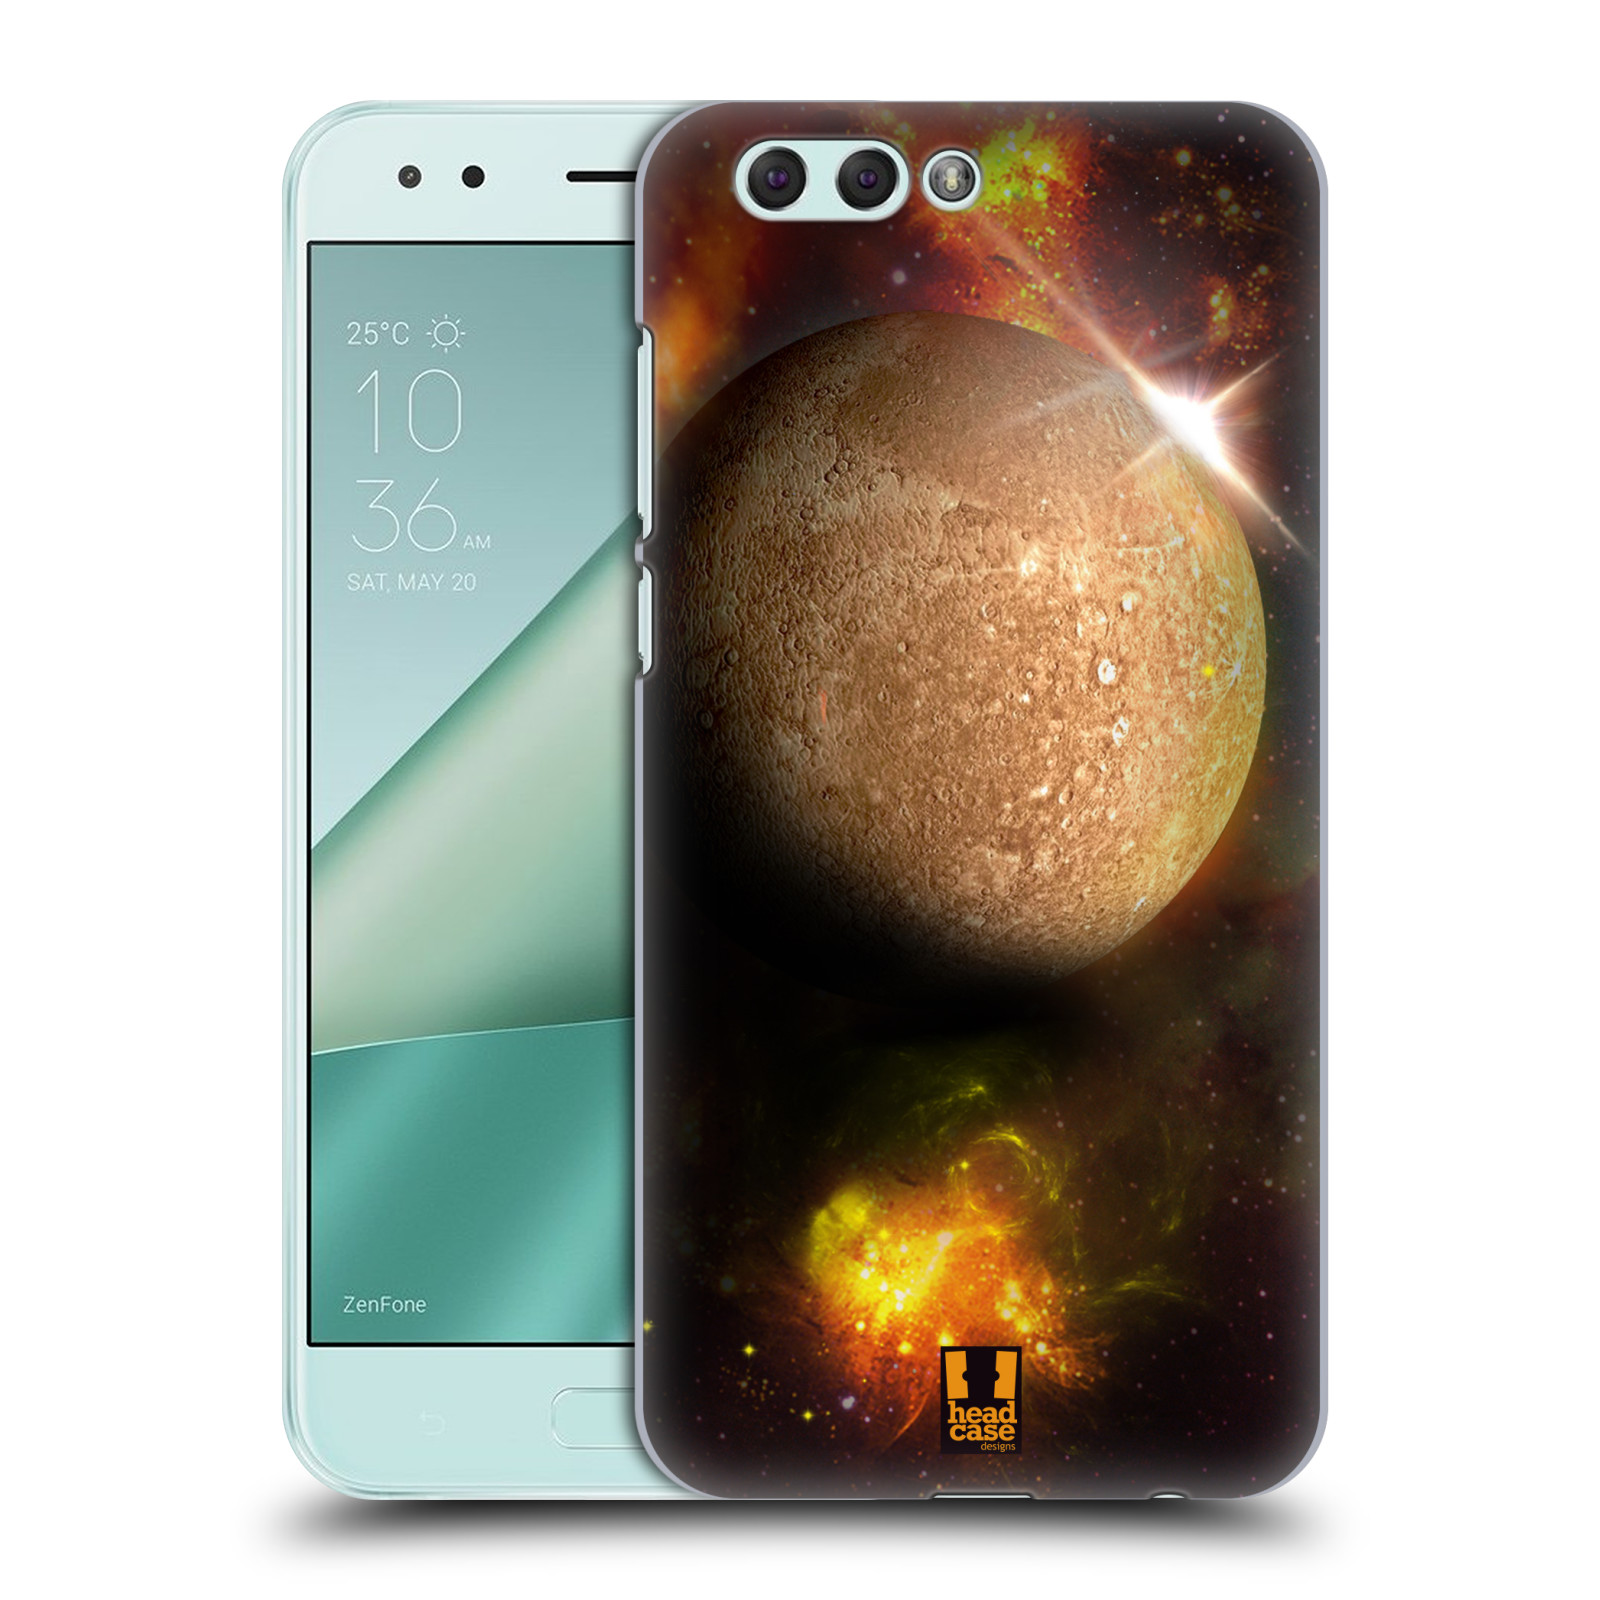 HEAD CASE plastový obal na mobil Asus Zenfone 4 ZE554KL vzor Vesmírná krása MERKUR PLANETA